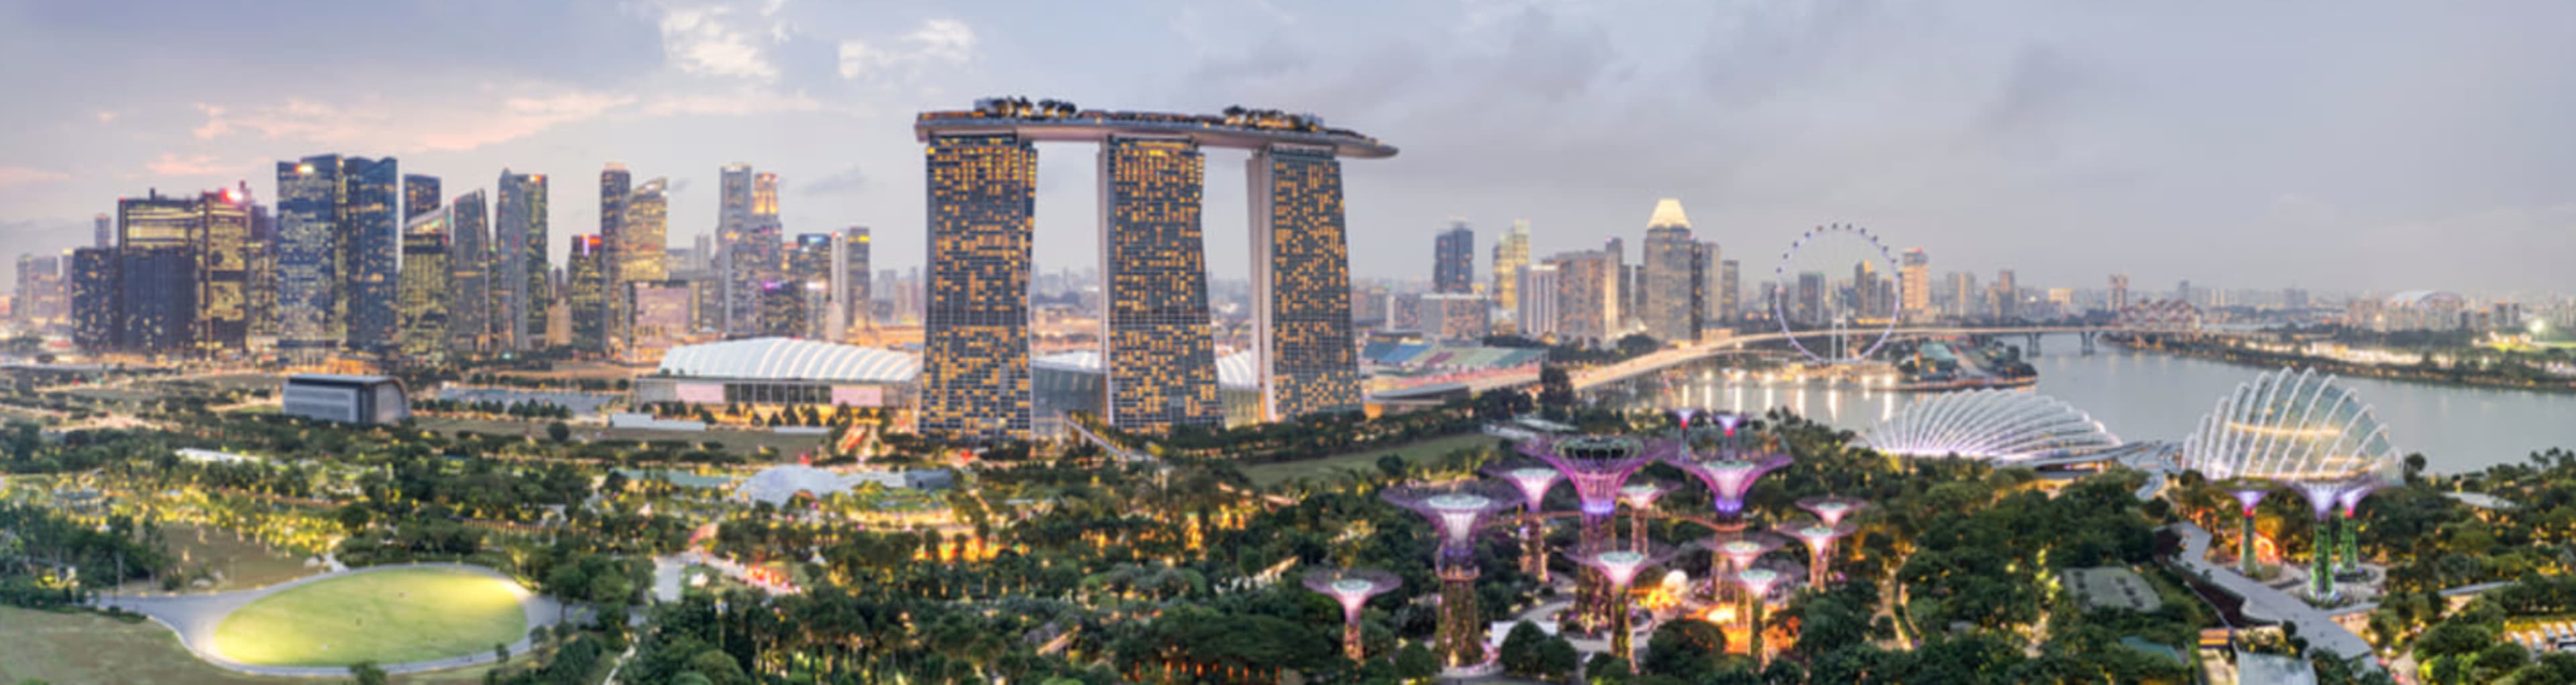 Singapore skyline showing the Marina Bay Sands Resort